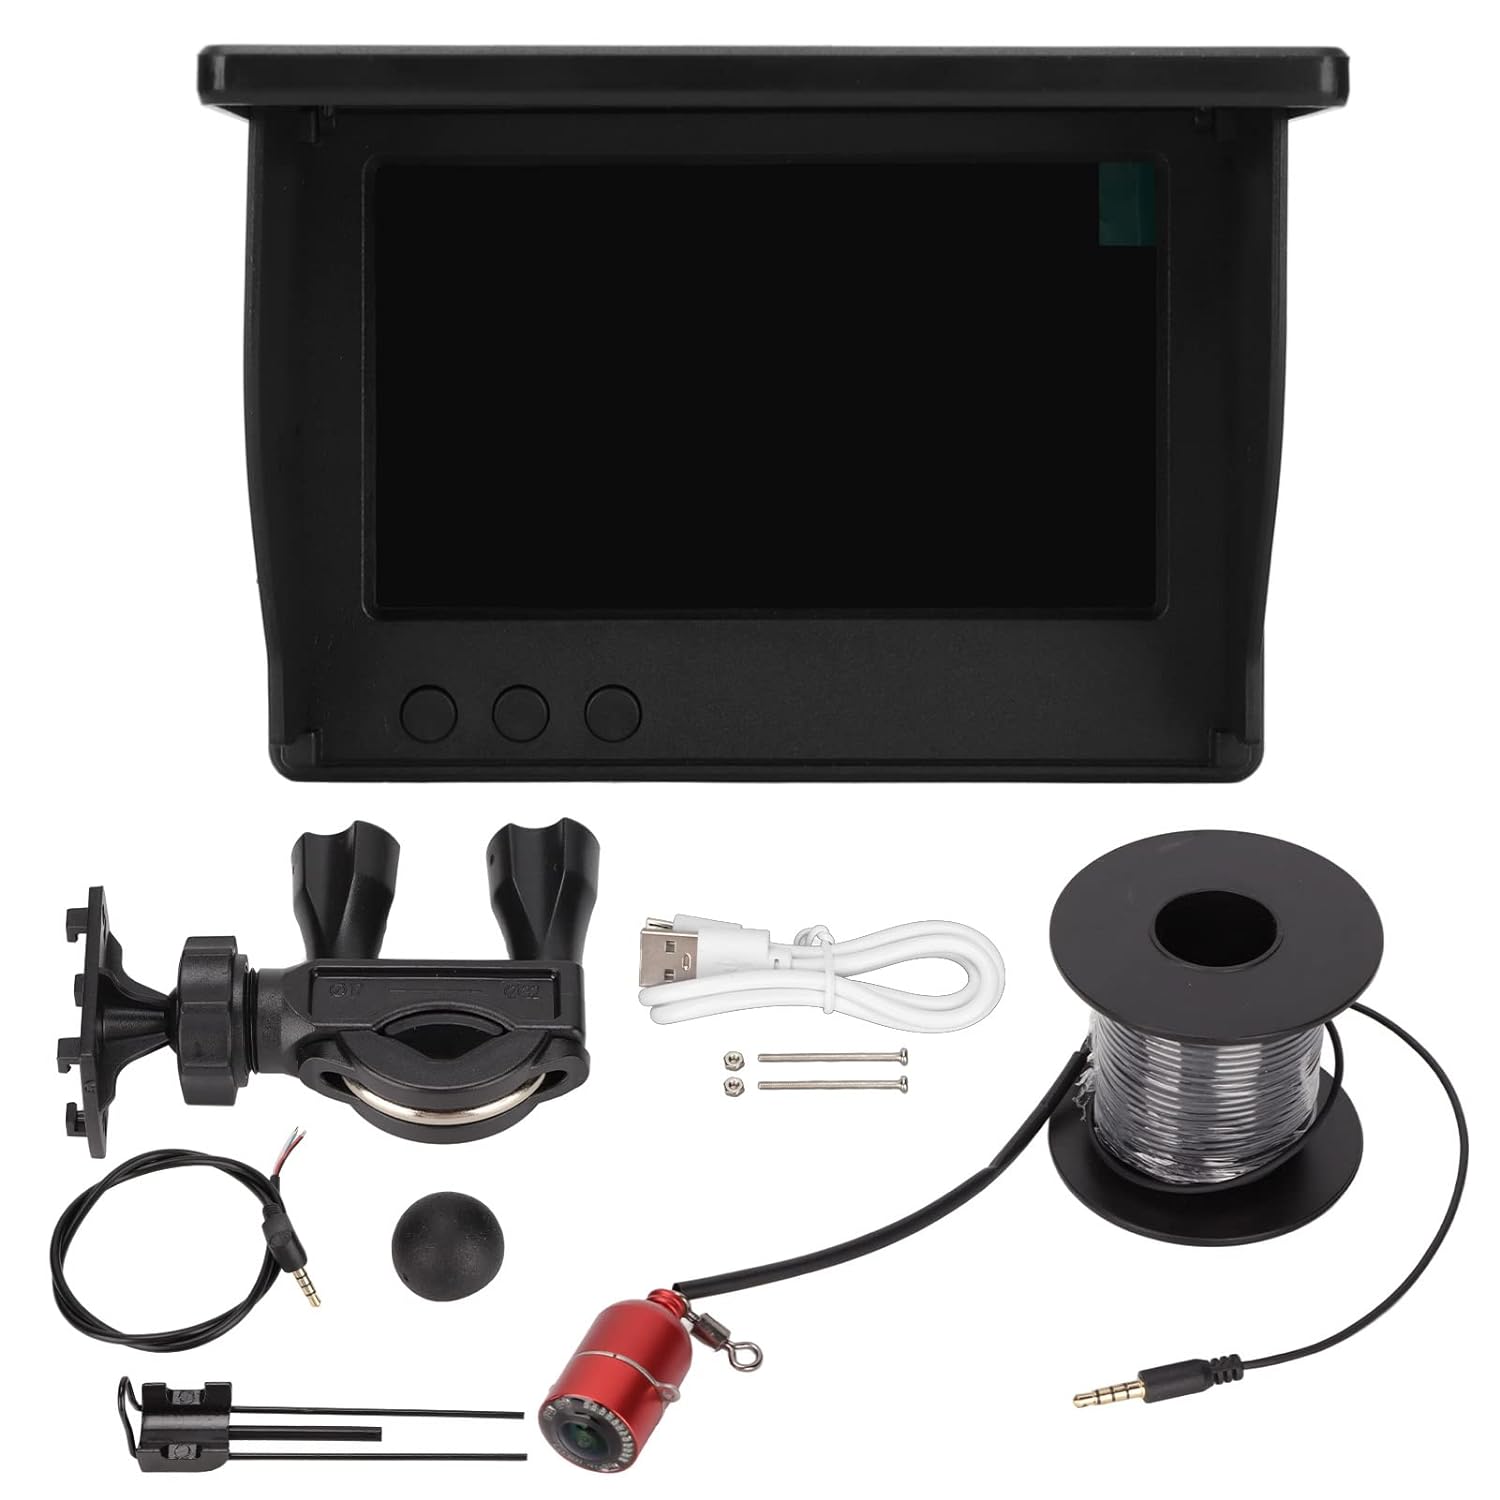 IP67 Waterproof 1000TVL Fish Finder, 4.3in LCD Monitor Underwater Fishing Camera Kit, Portable Fish Depth Finder for Sea Ice Lake Boat Fishing